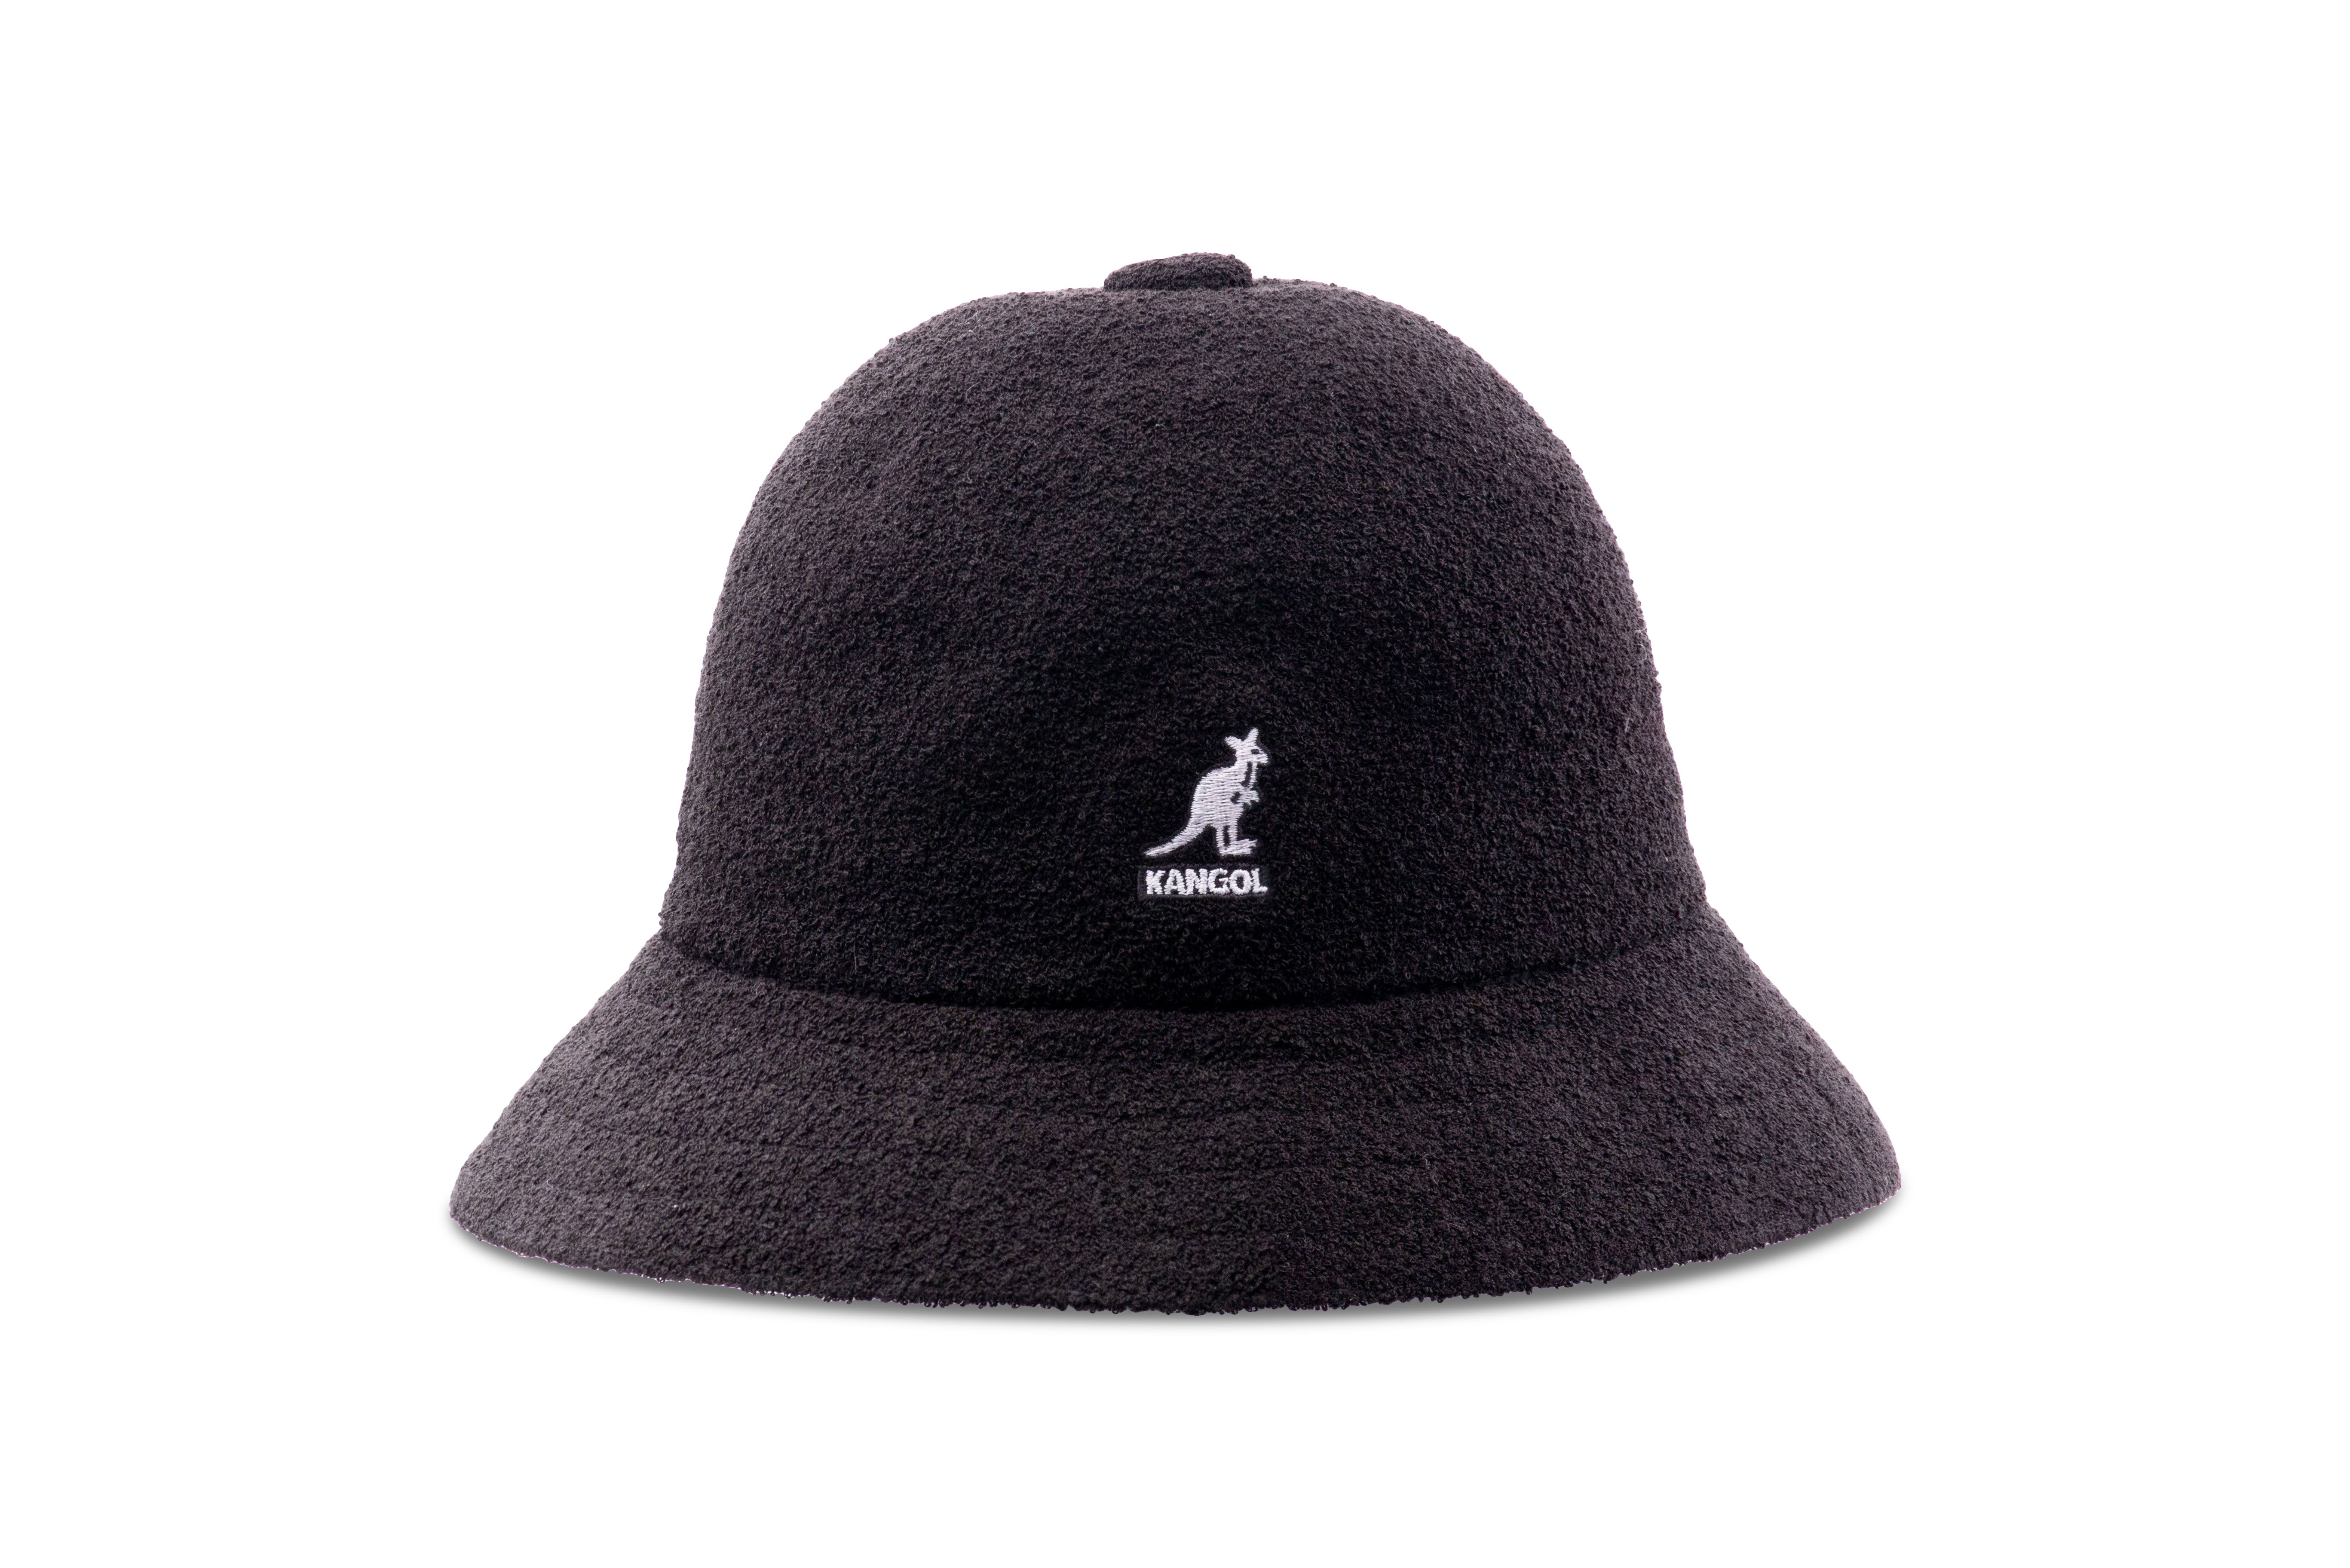 Kangol Bucket Bermuda Unisex Hat - Black - M